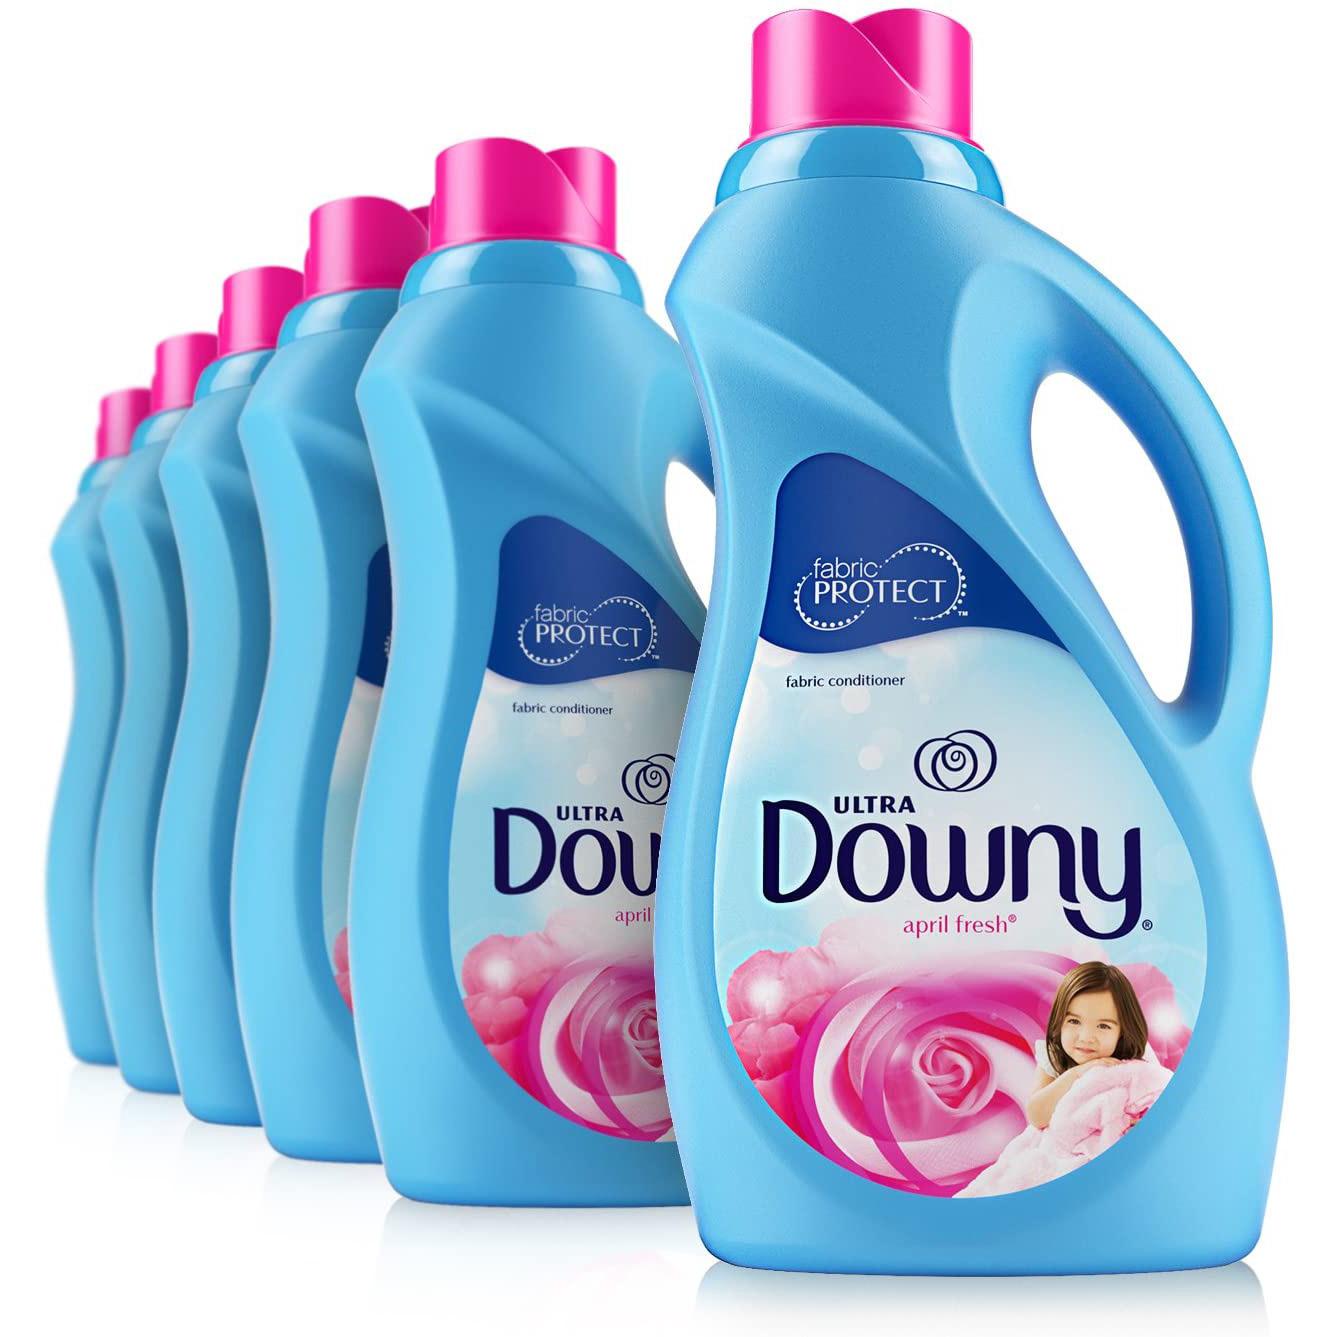 6 Downy Ultra April Fresh Liquid Fabric Softener for $14.04 Shipped